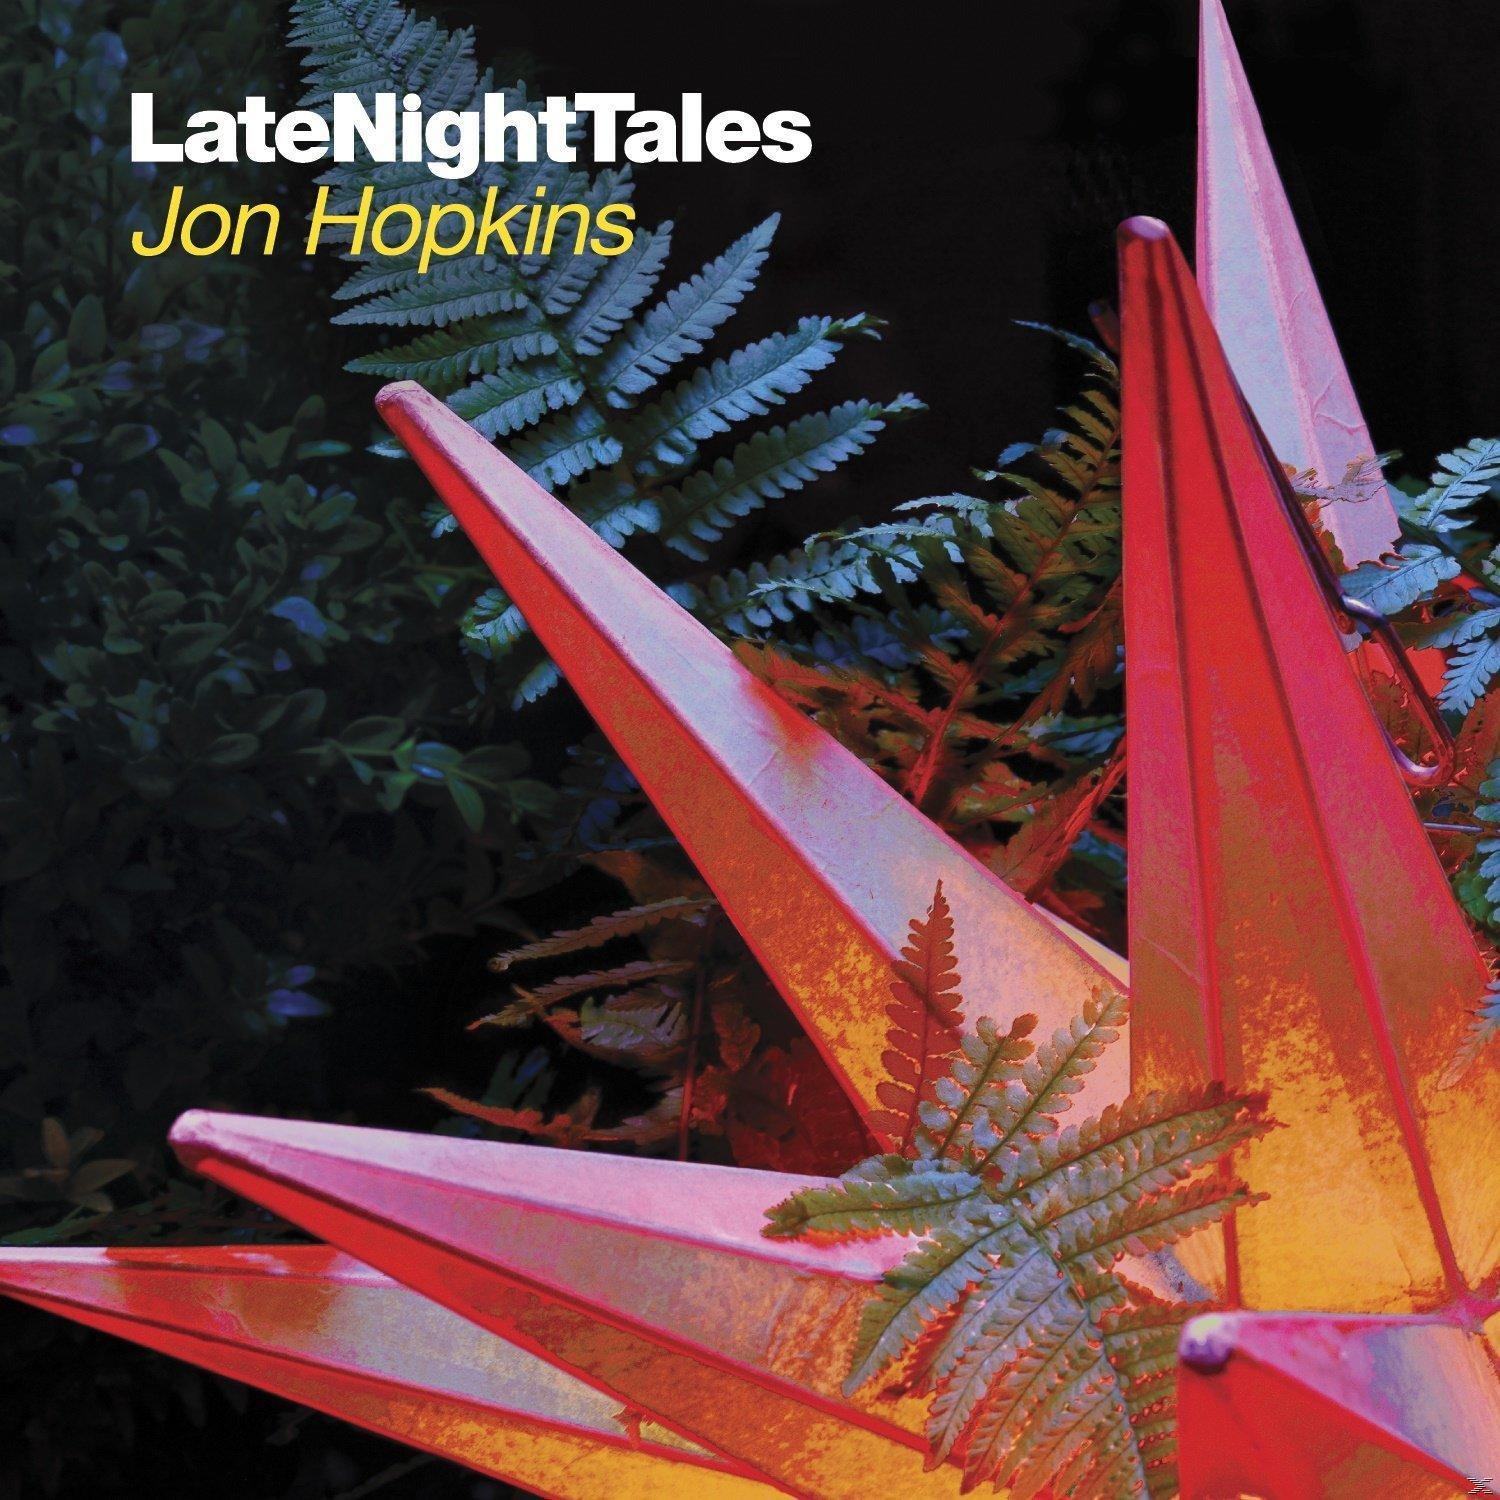 Late + (LP (2lp+Mp3/180g/Gatefold) Tales Night - - Hopkins Download) Jon